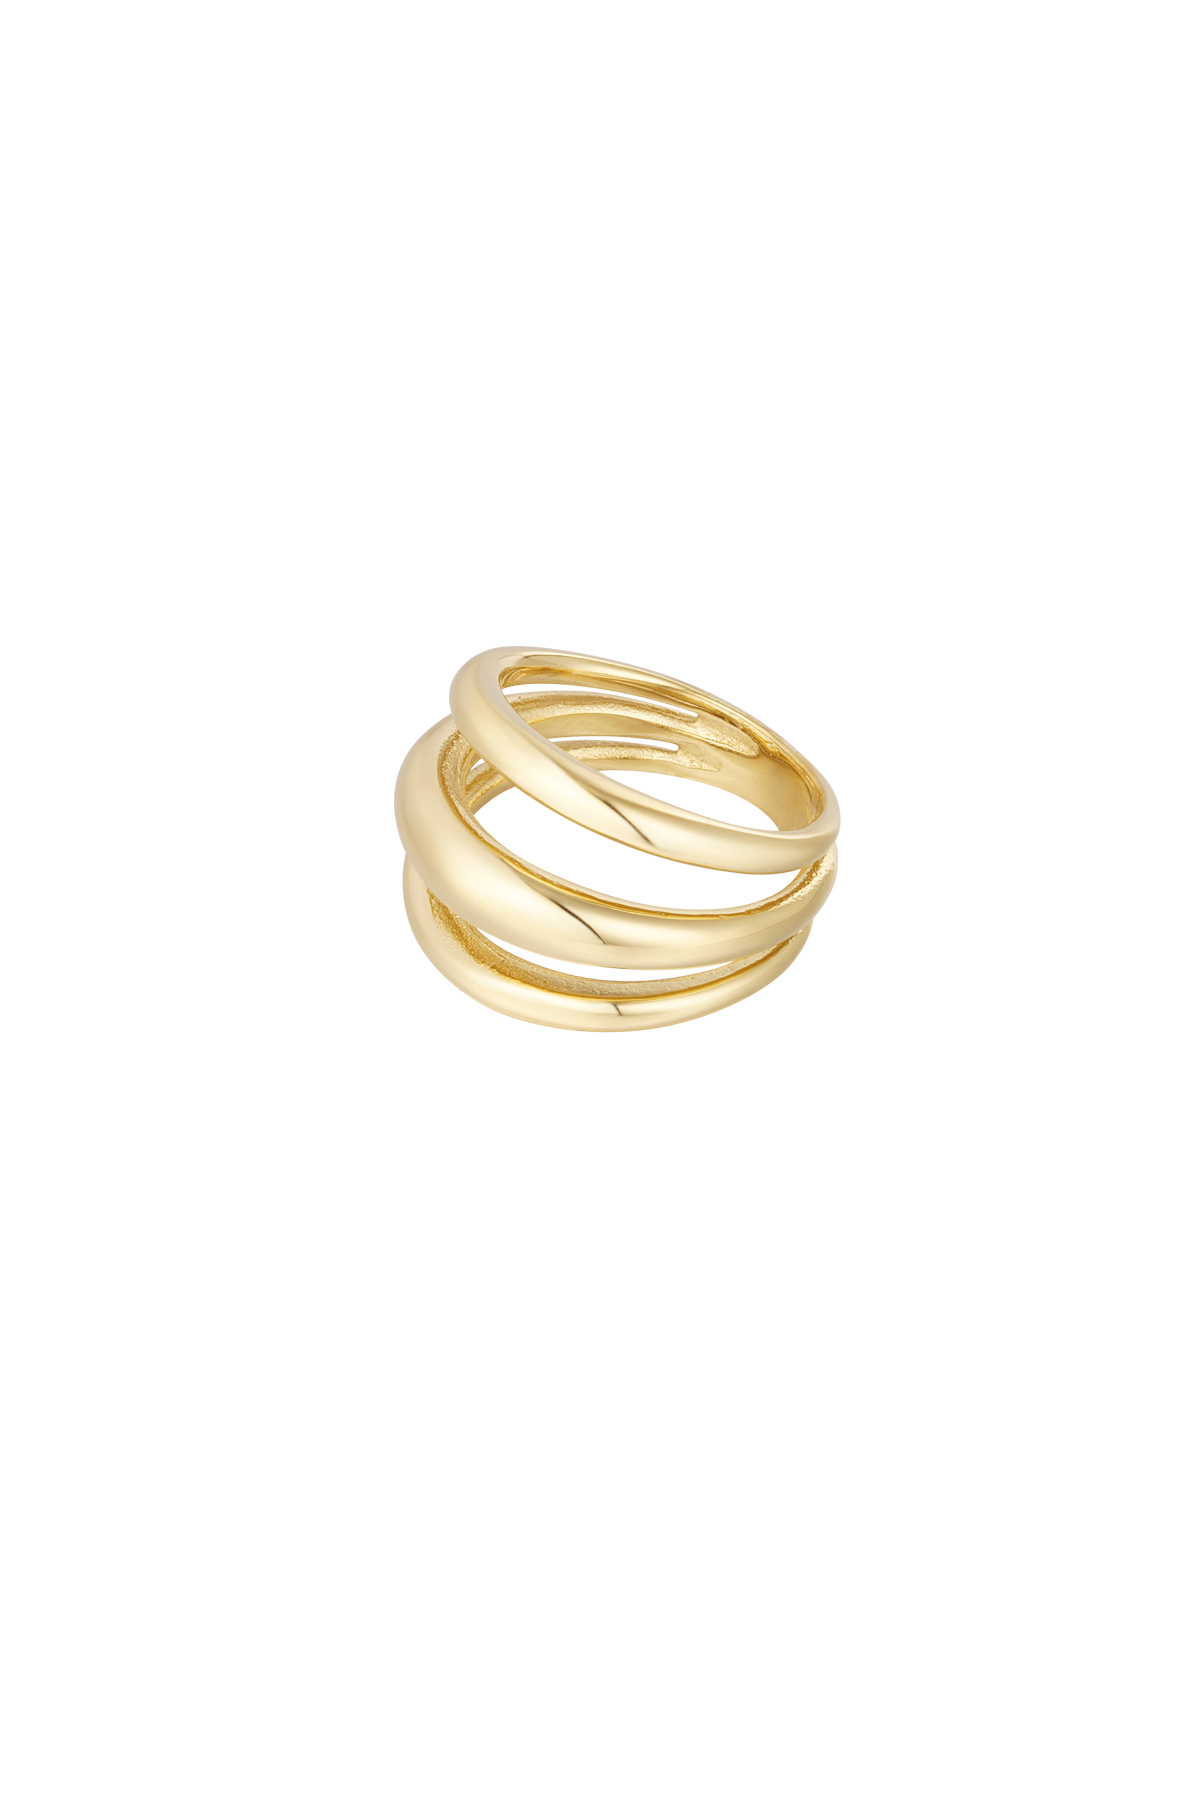 Ring three layers - gold h5 